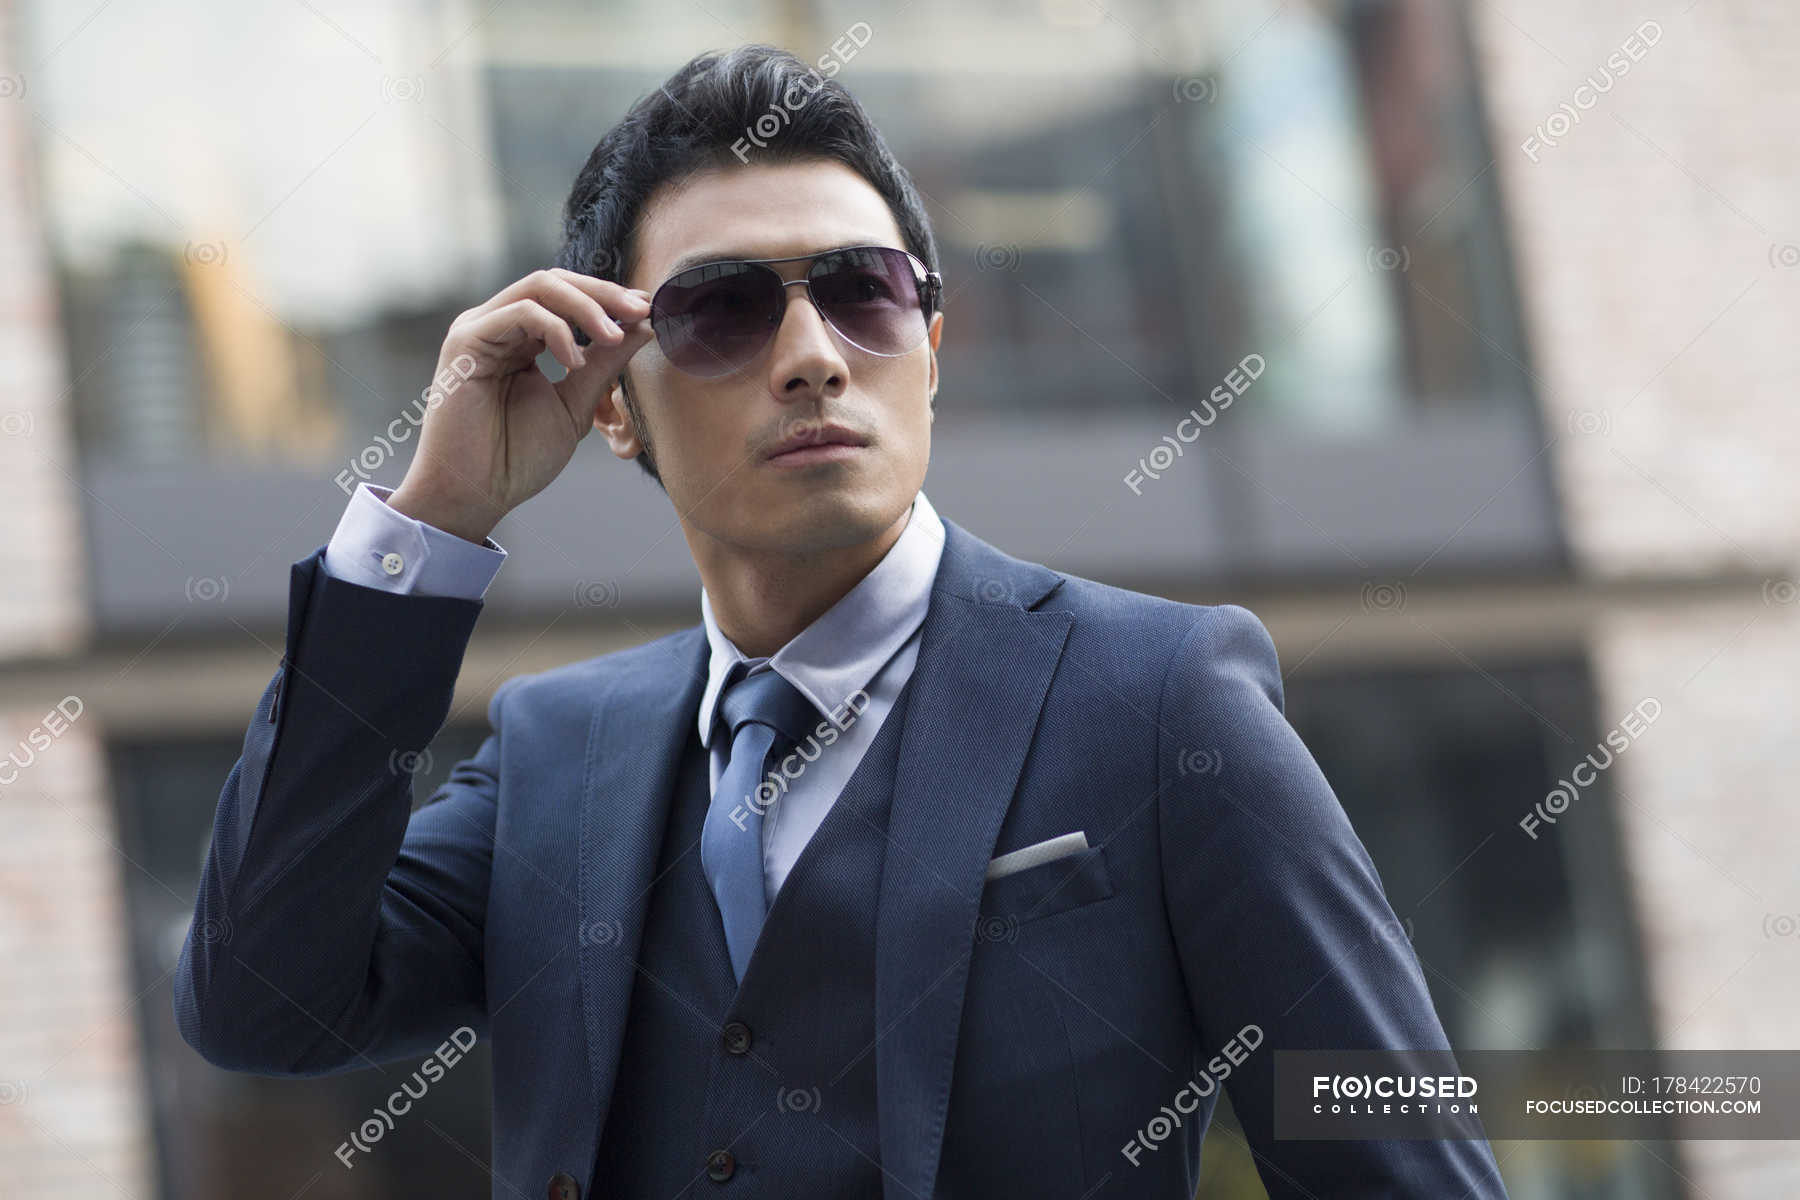 Focused 178422570 Stock Photo Asian Man Putting Sunglasses Urban 